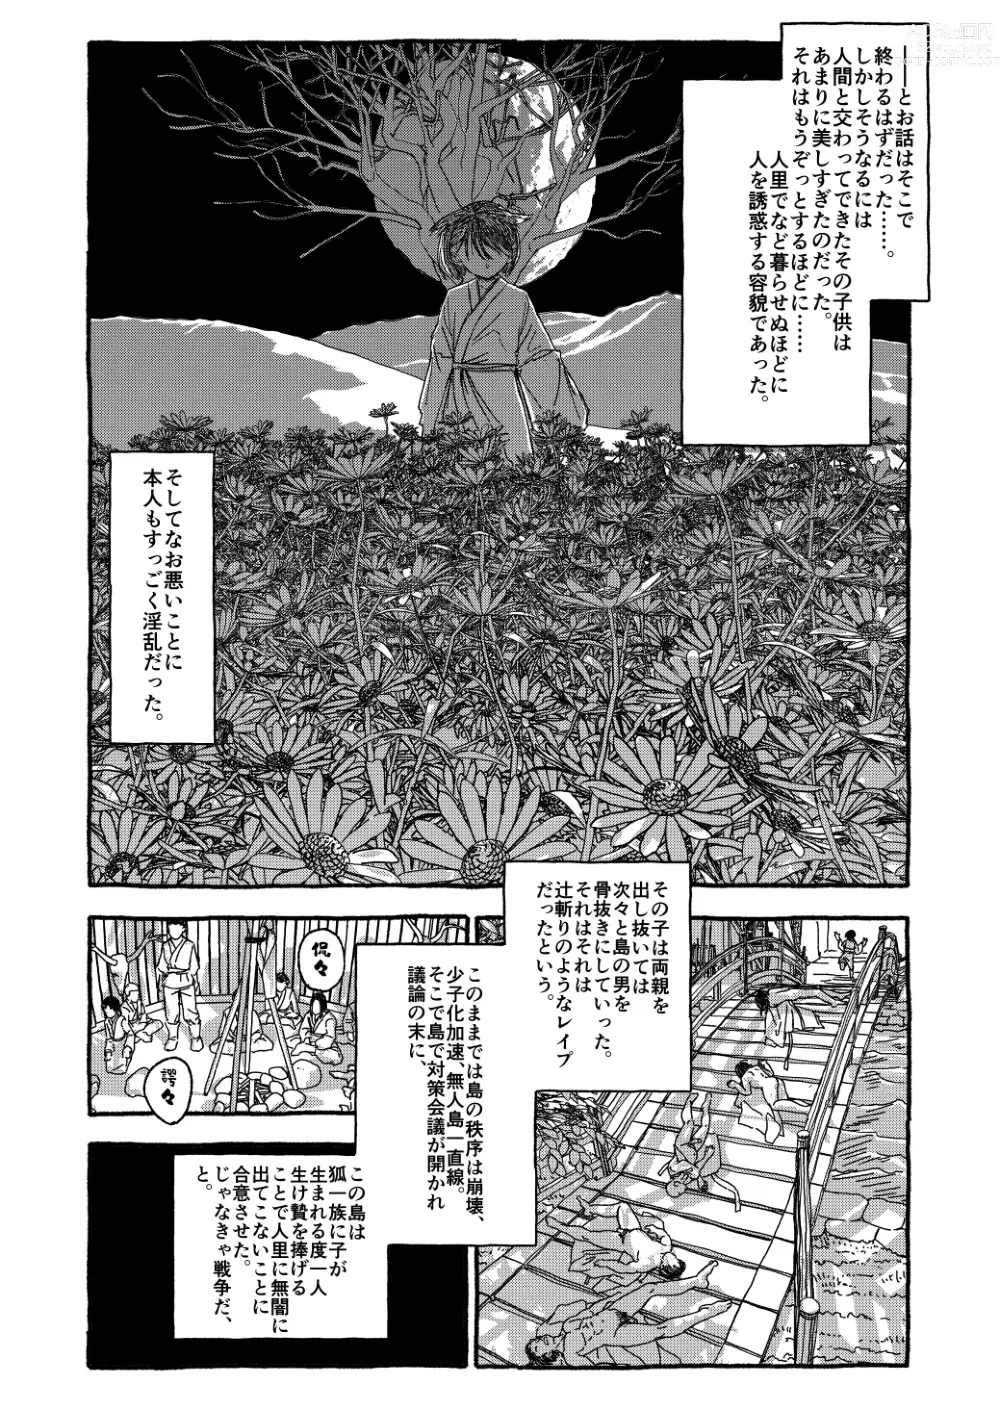 Page 19 of doujinshi Deatte 4-Kounen De Gattai